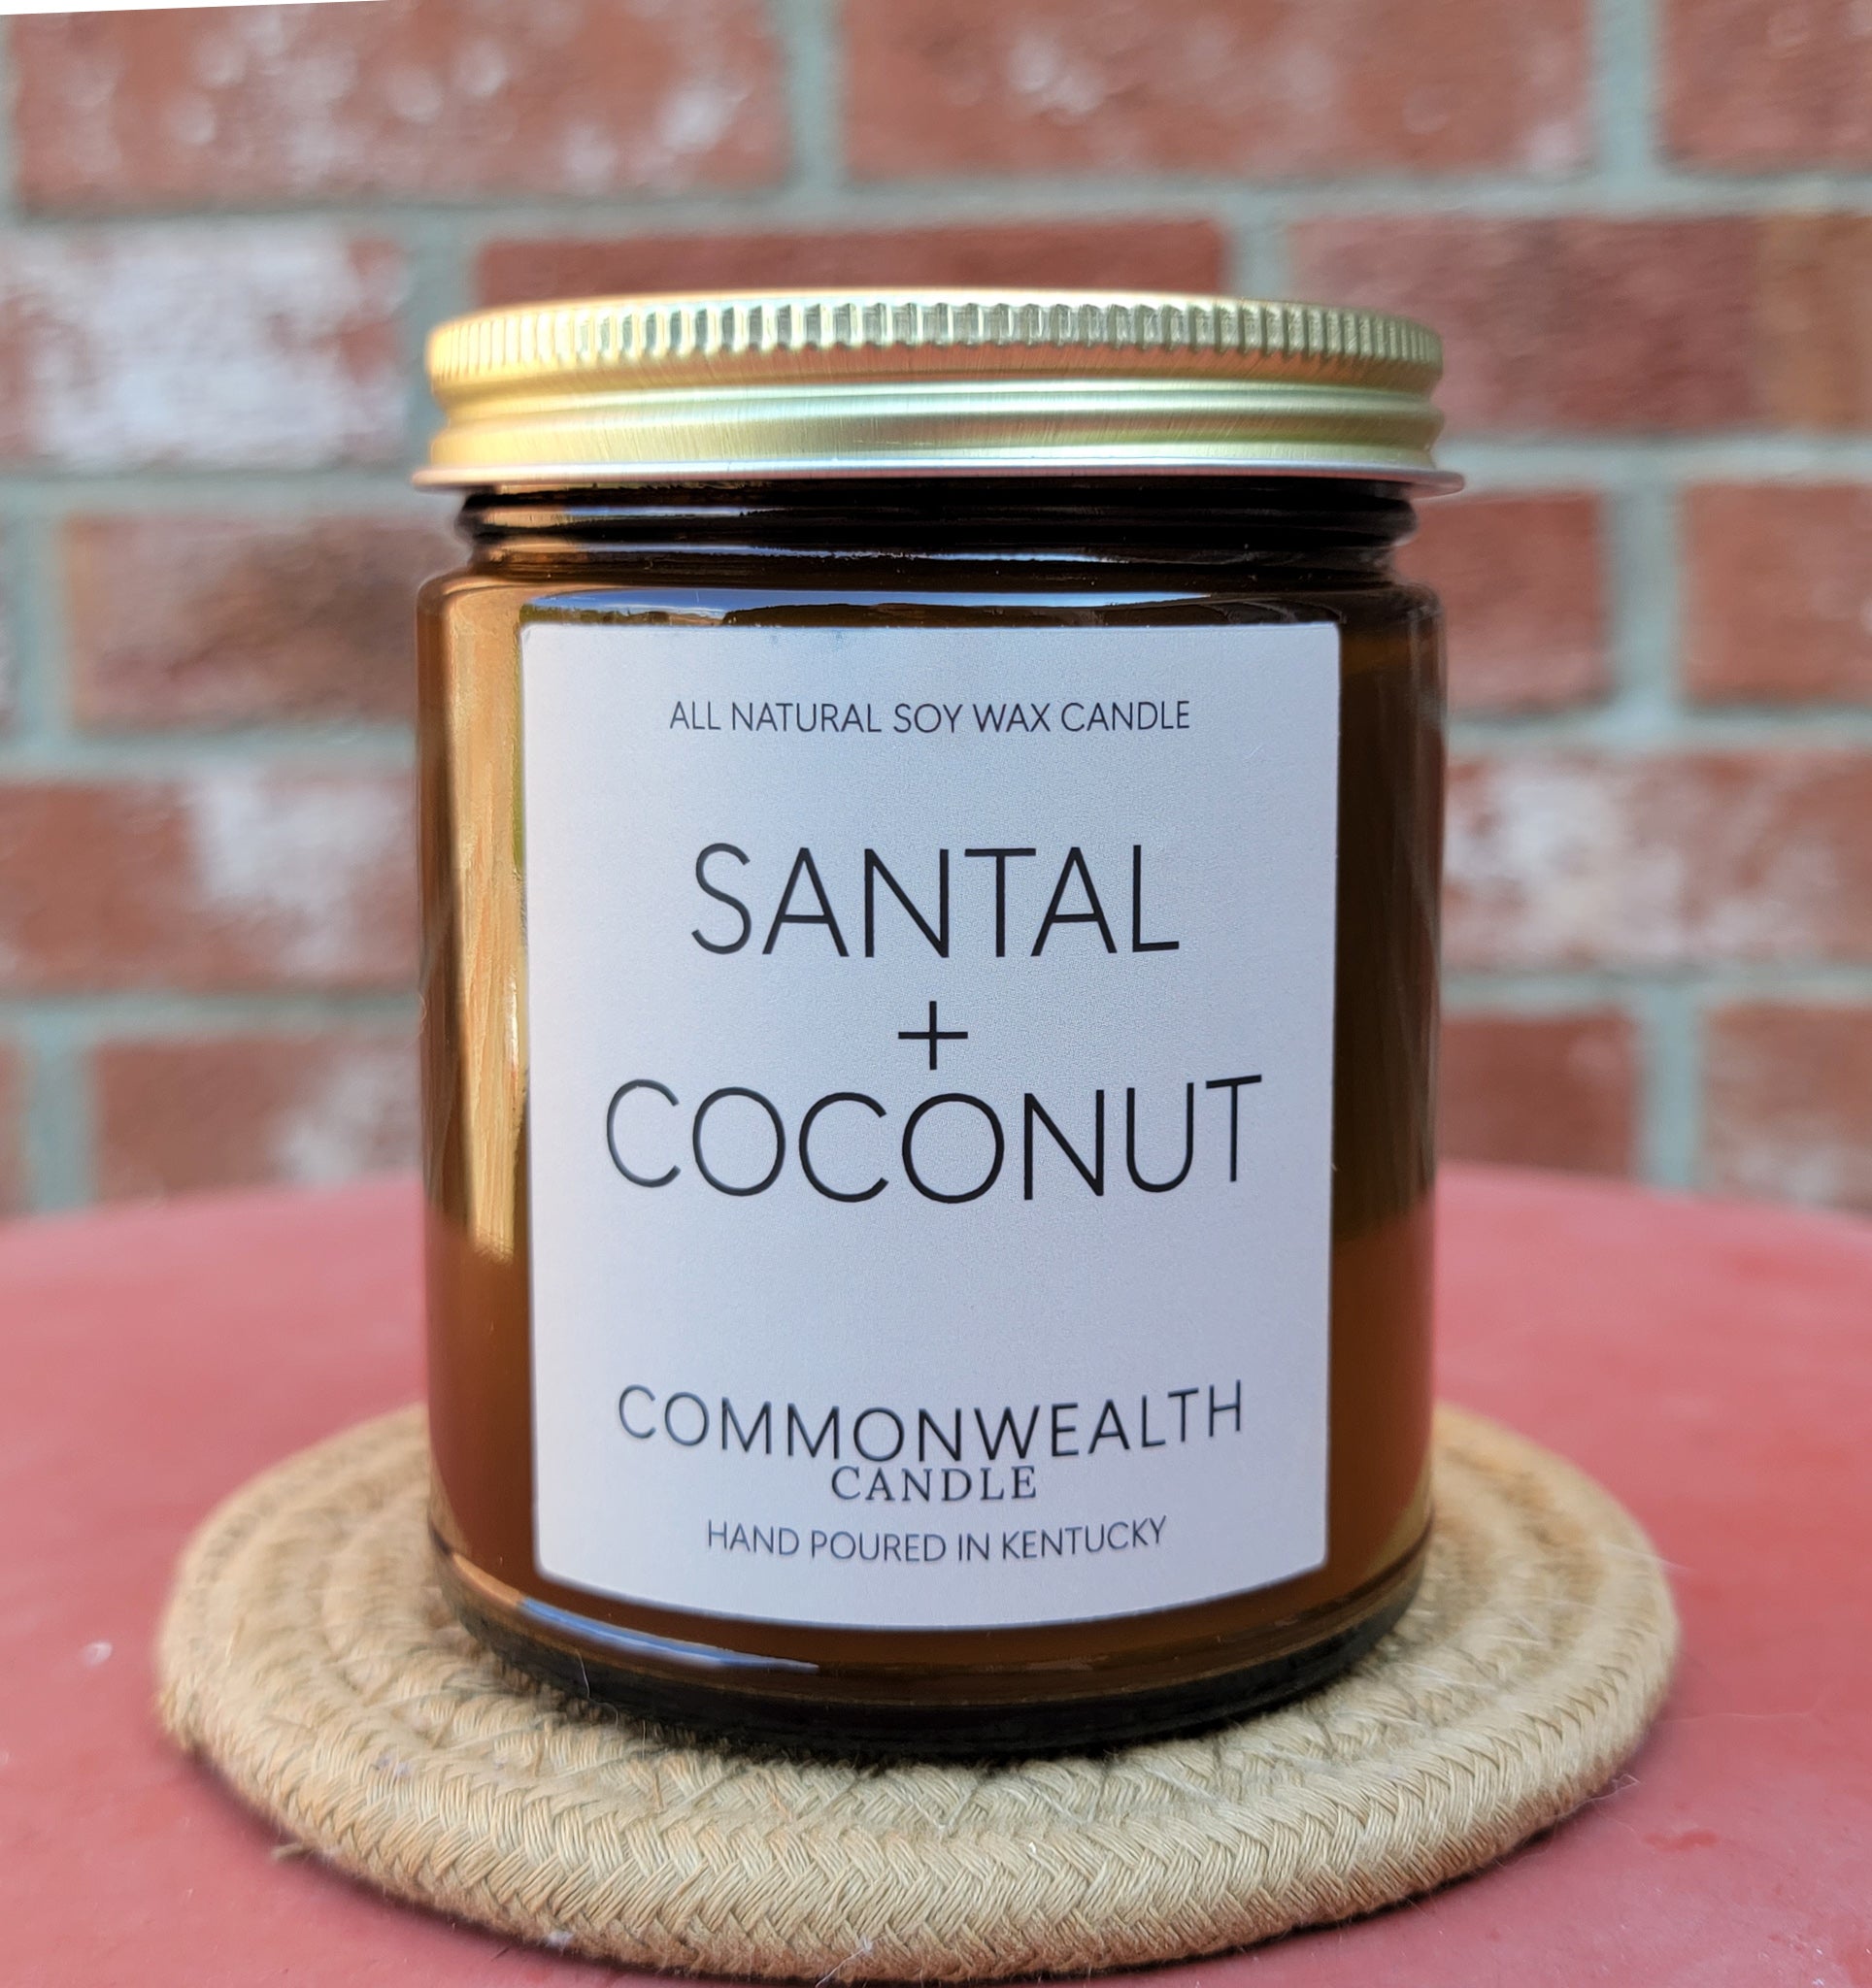 Santal + Coconut